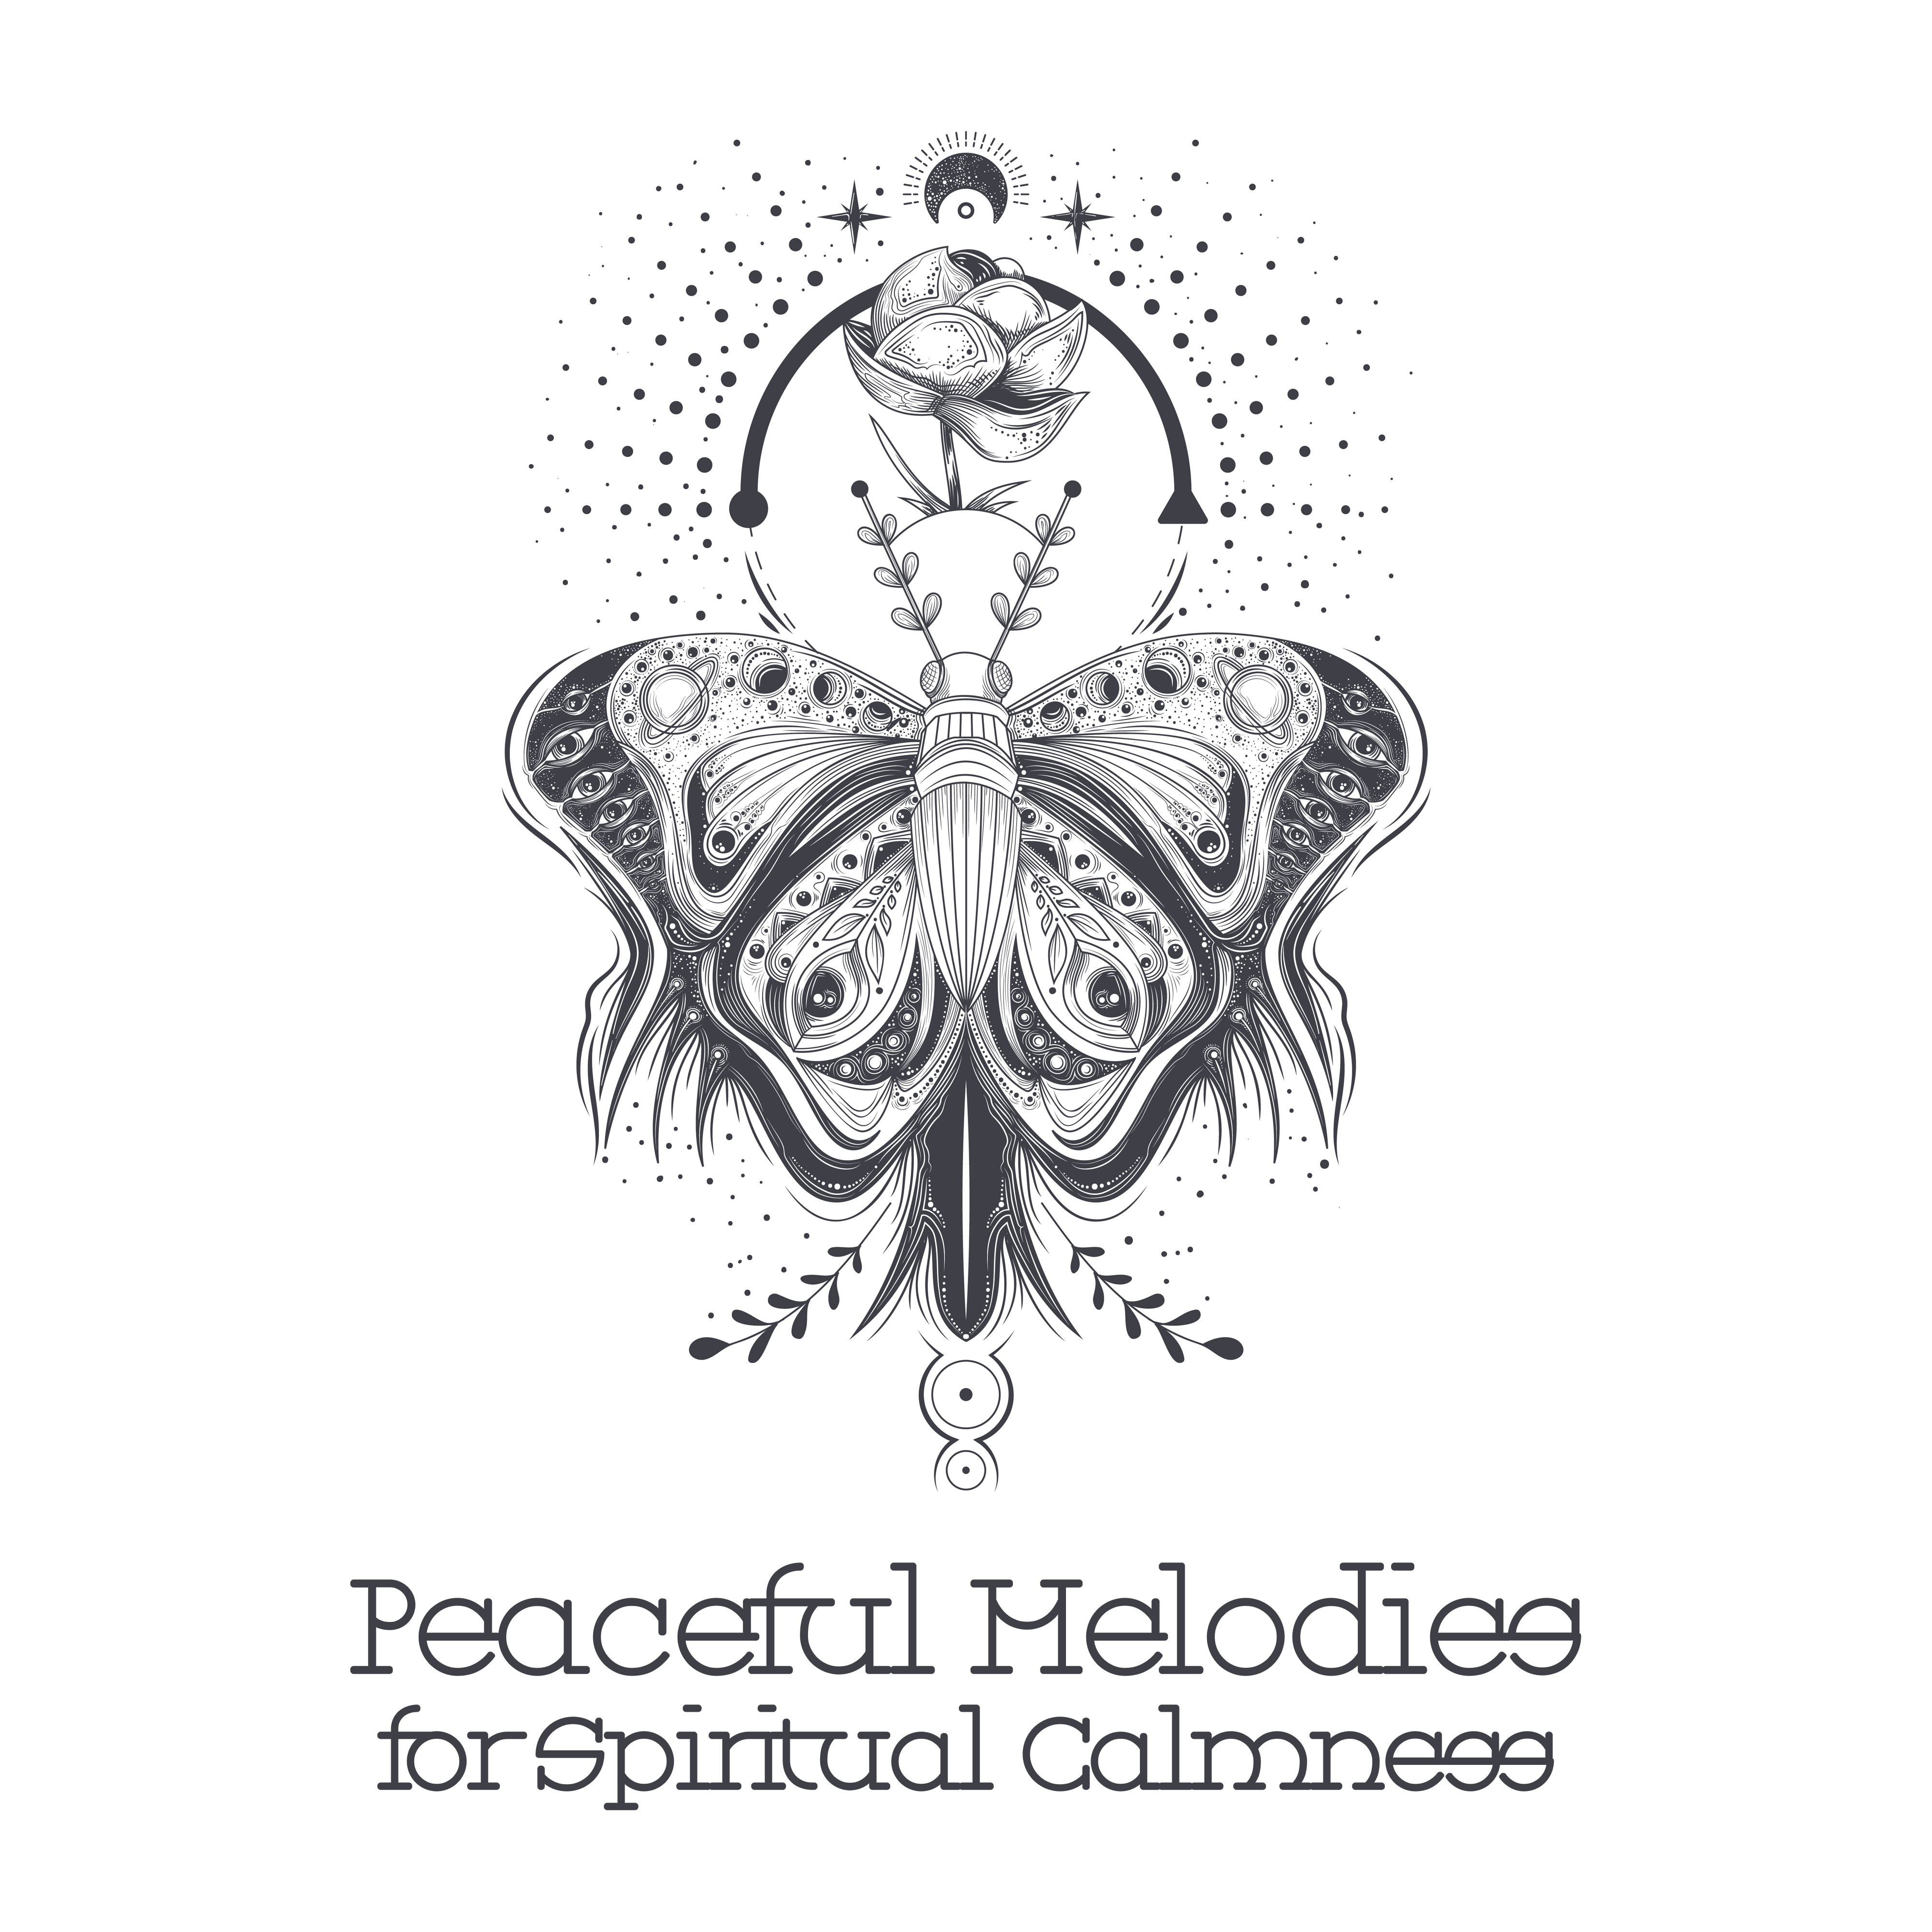 Peaceful Melodies for Spiritual Calmness